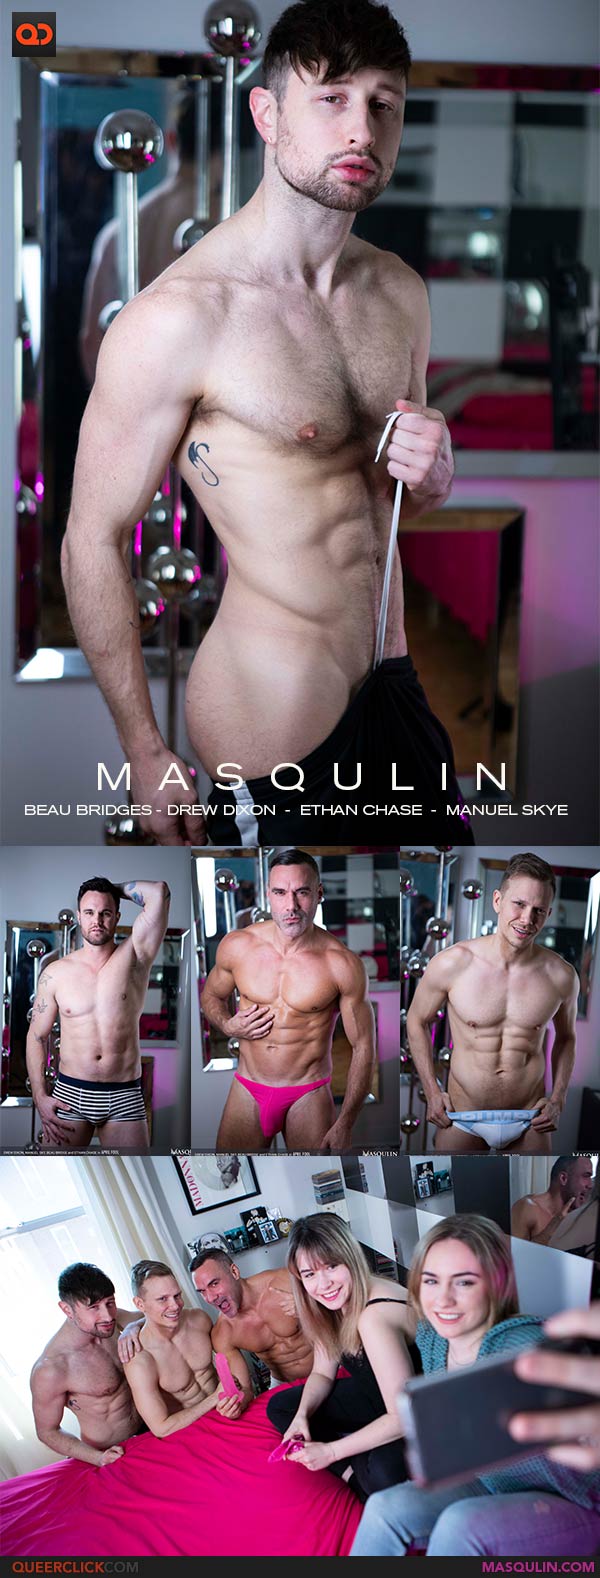 Masqulin: Beau Bridge, Drew Dixon, Ethan Chase and Manuel Skye